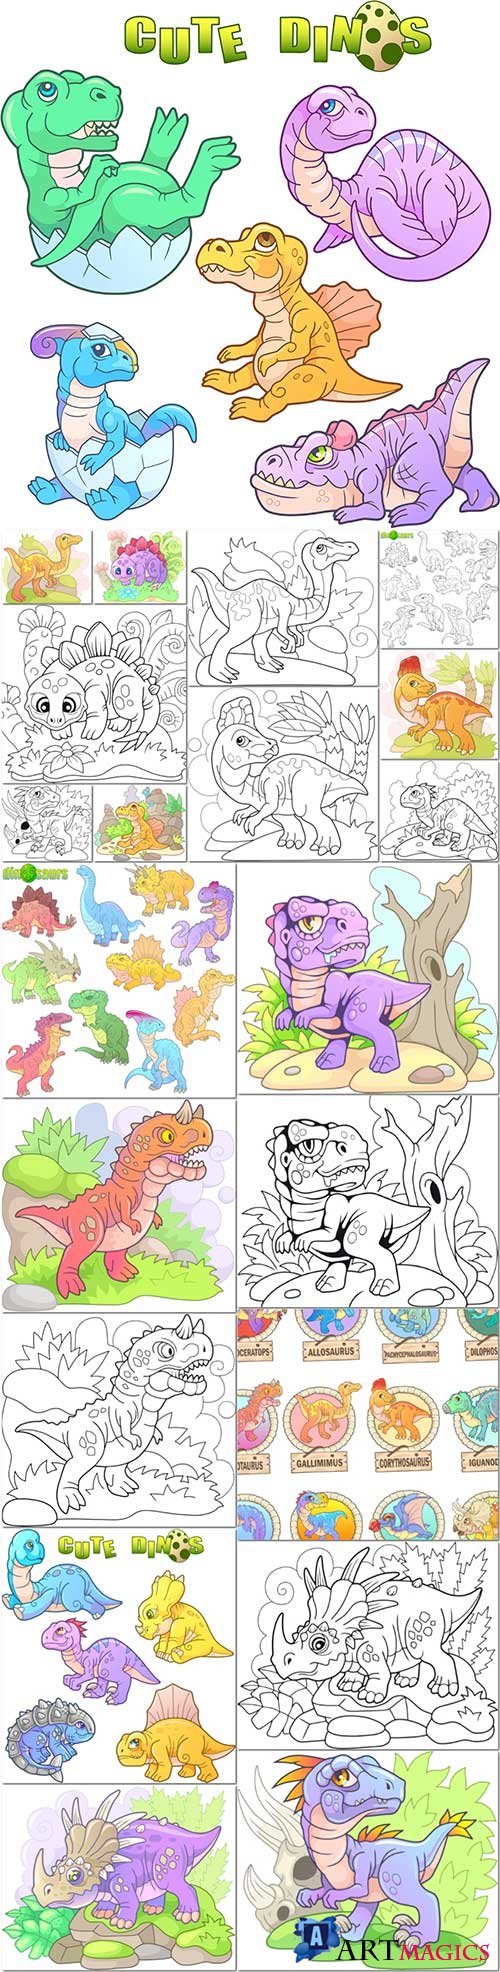 Cartoon dinosaurs premium vector